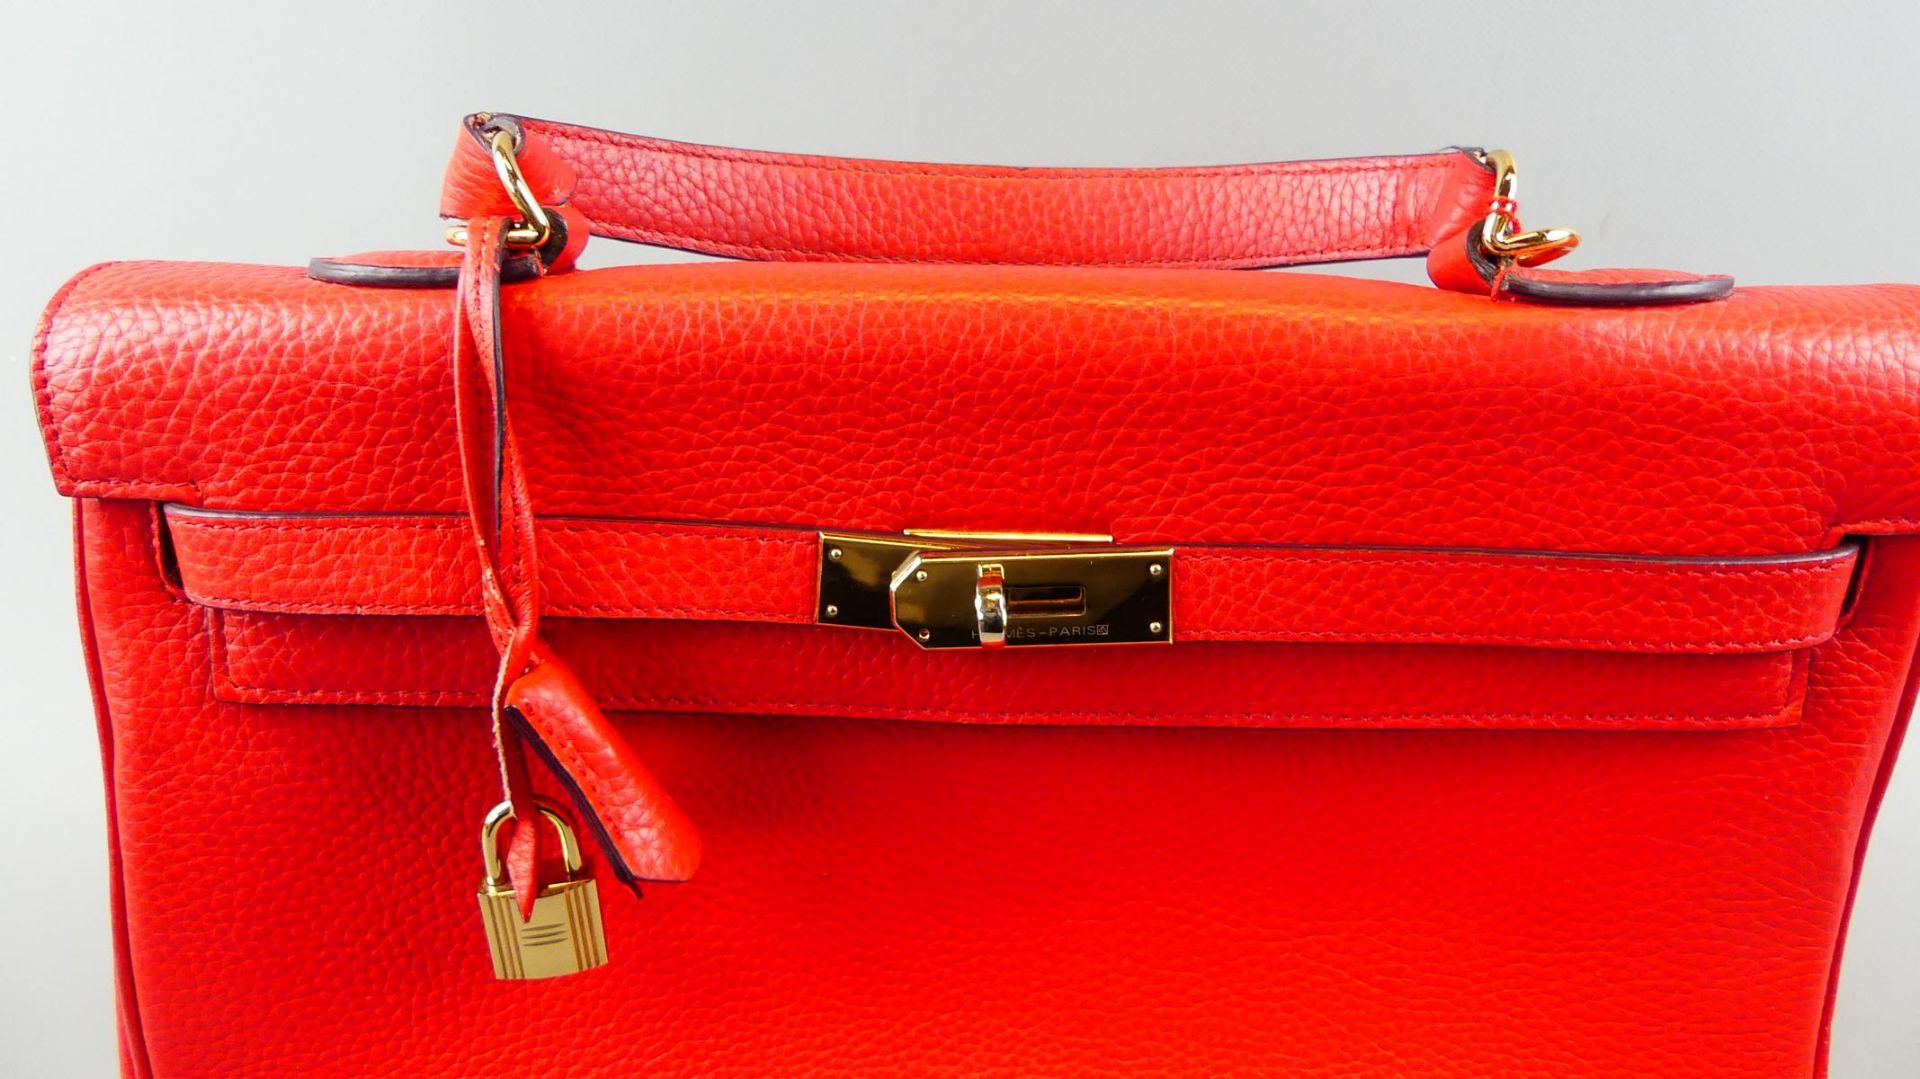 HERMÈS Handtasche "KELLY BAG 35", Koll. 2012, Modell Retourné, - Bild 3 aus 10